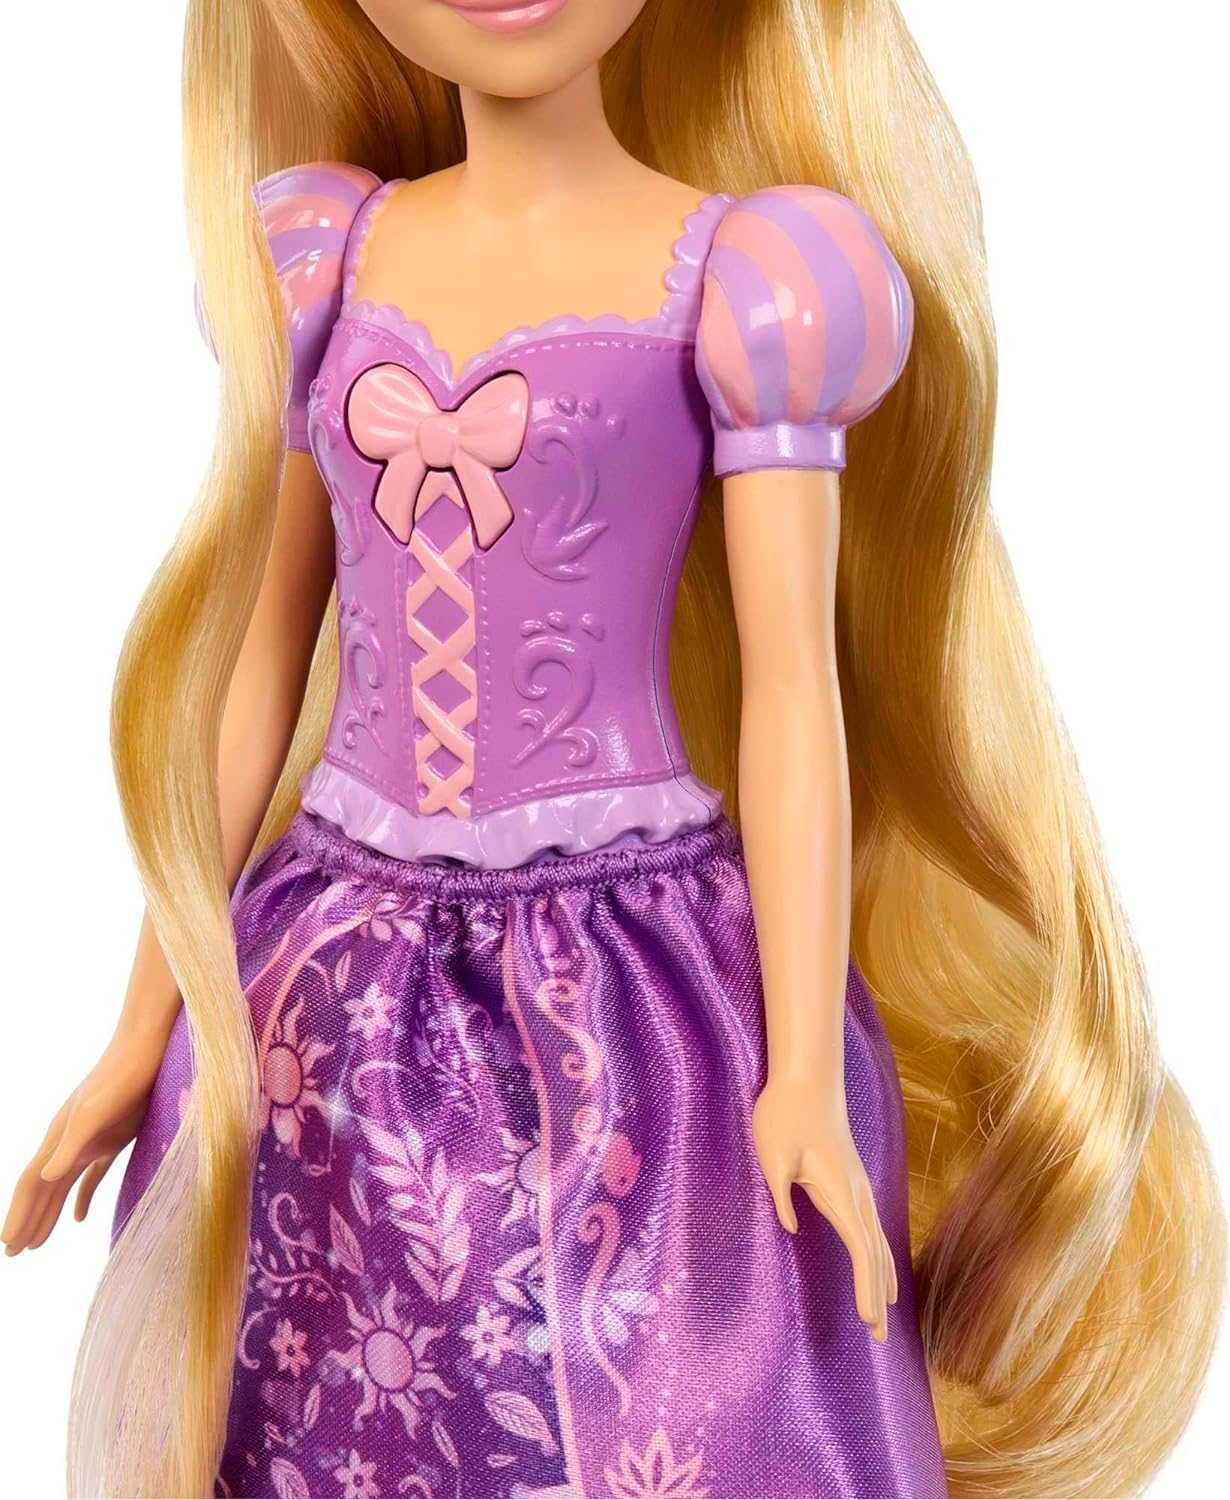 Кукла принцесса Дисней Рапунцель музыкальная поющая Disney Princess